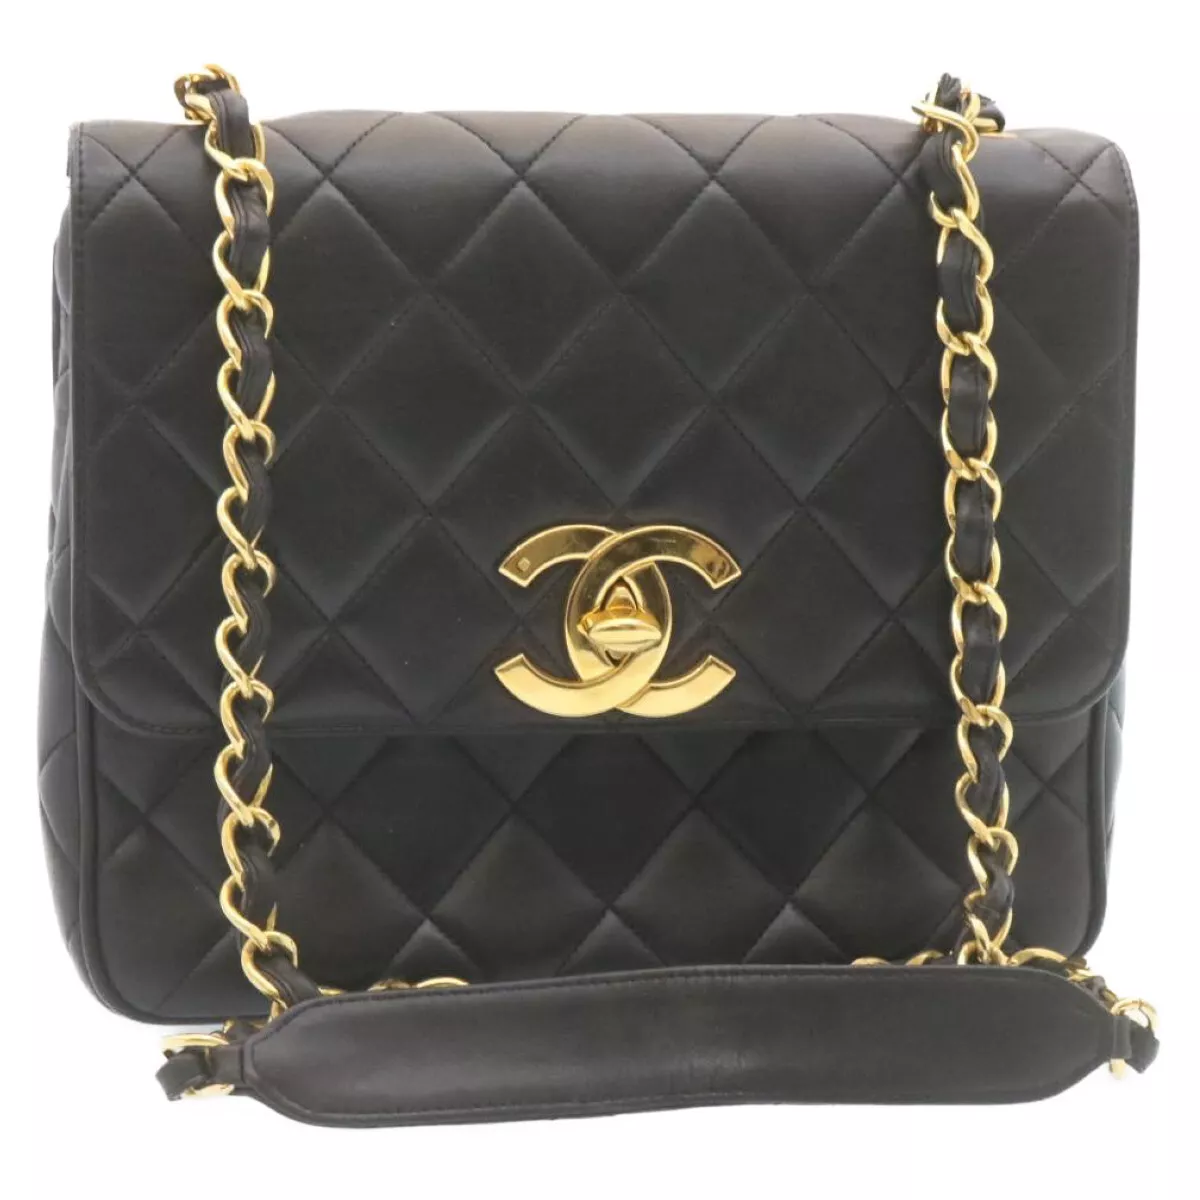 Handbags Chanel Chanel Mini Classic Handbag Timeless CC Flap Black Quilted Canvas Clutch